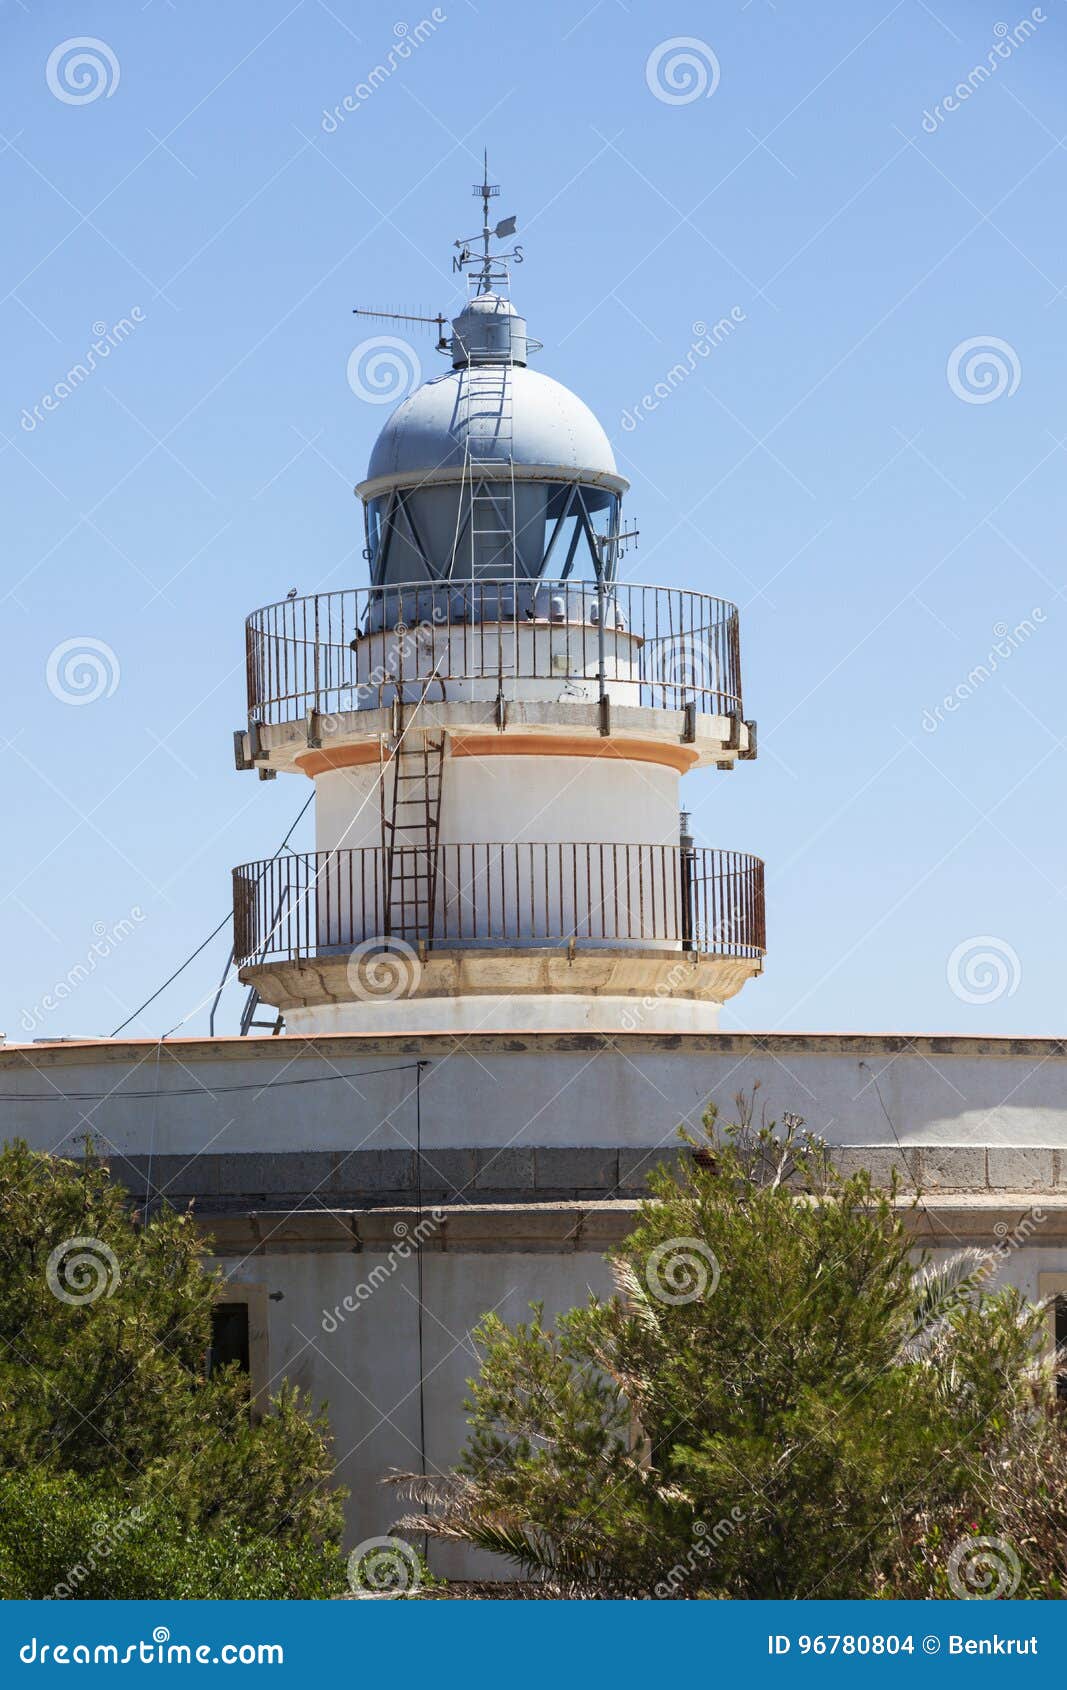 oropesa del mar lighthouse